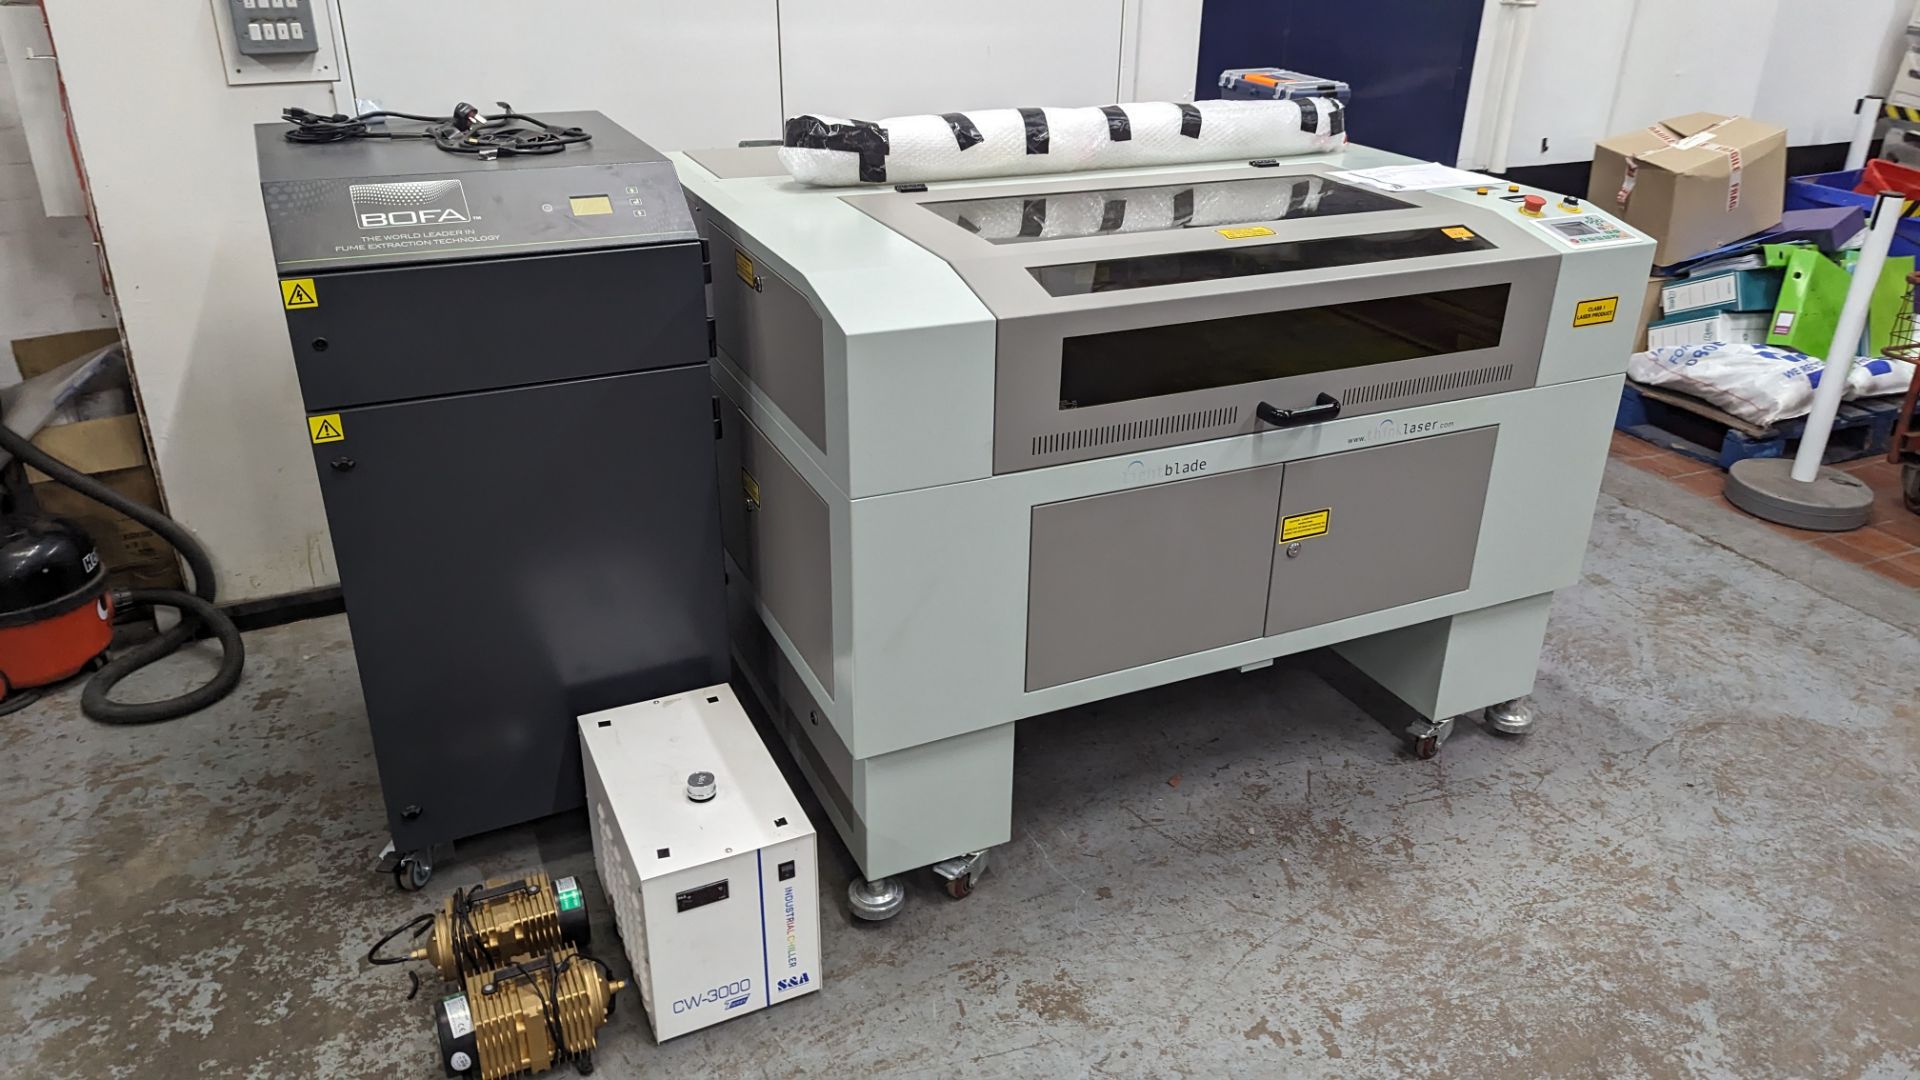 2021 Thinklaser Lightblade 6090 laser engraving machine including dedicated extraction system. - Image 13 of 49